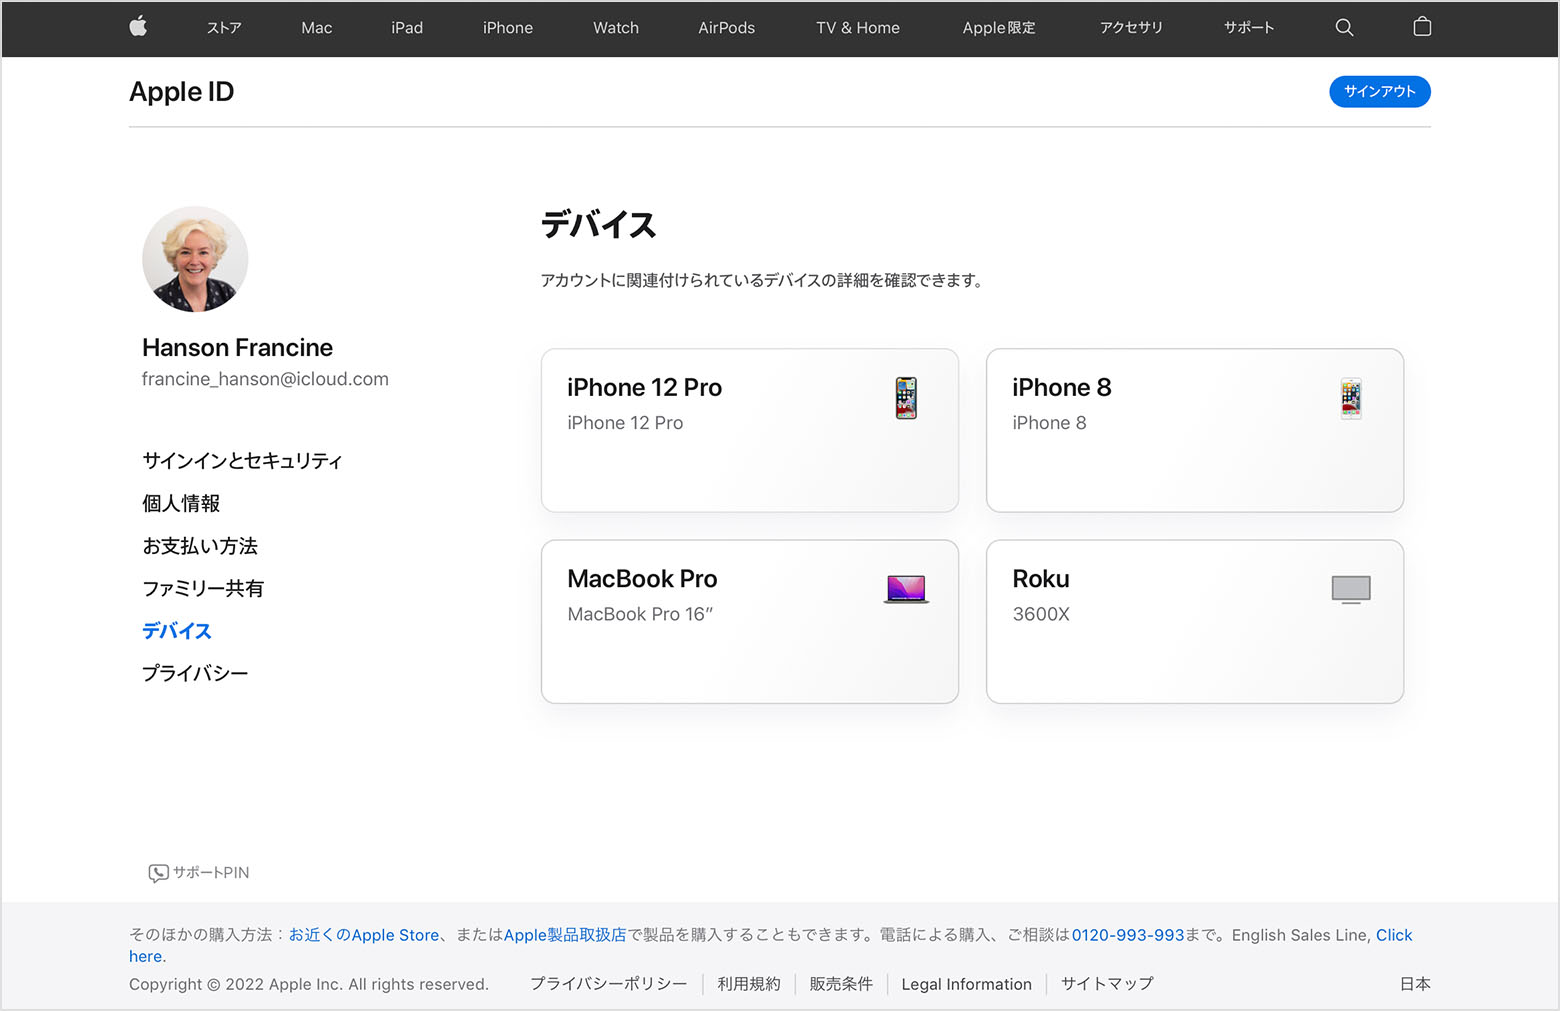 appleid.apple.com の図。Francine Hanson の 3 台のデバイス、iPhone 12 Pro、MacBook Pro、Roku が表示されています。